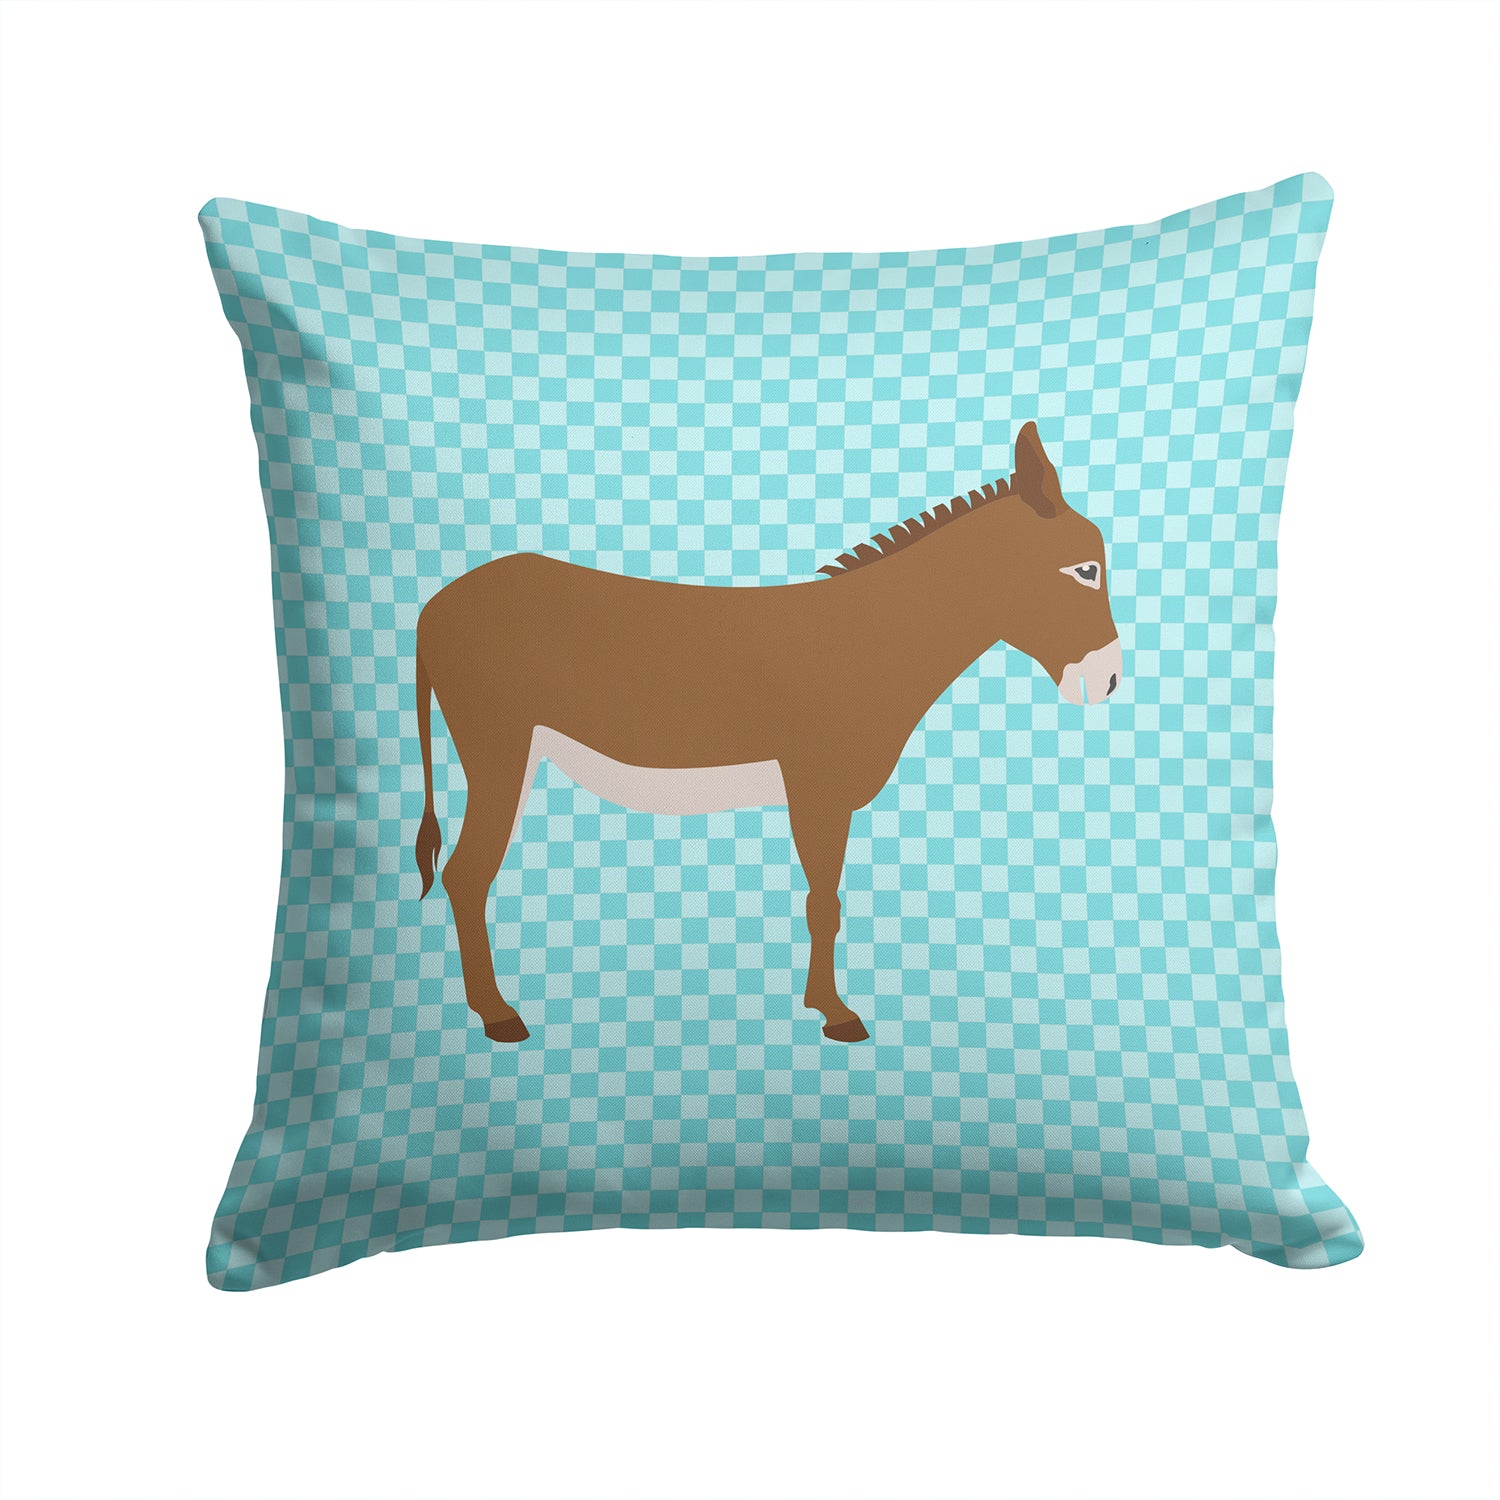 Cotentin Donkey Blue Check Fabric Decorative Pillow BB8023PW1414 - the-store.com